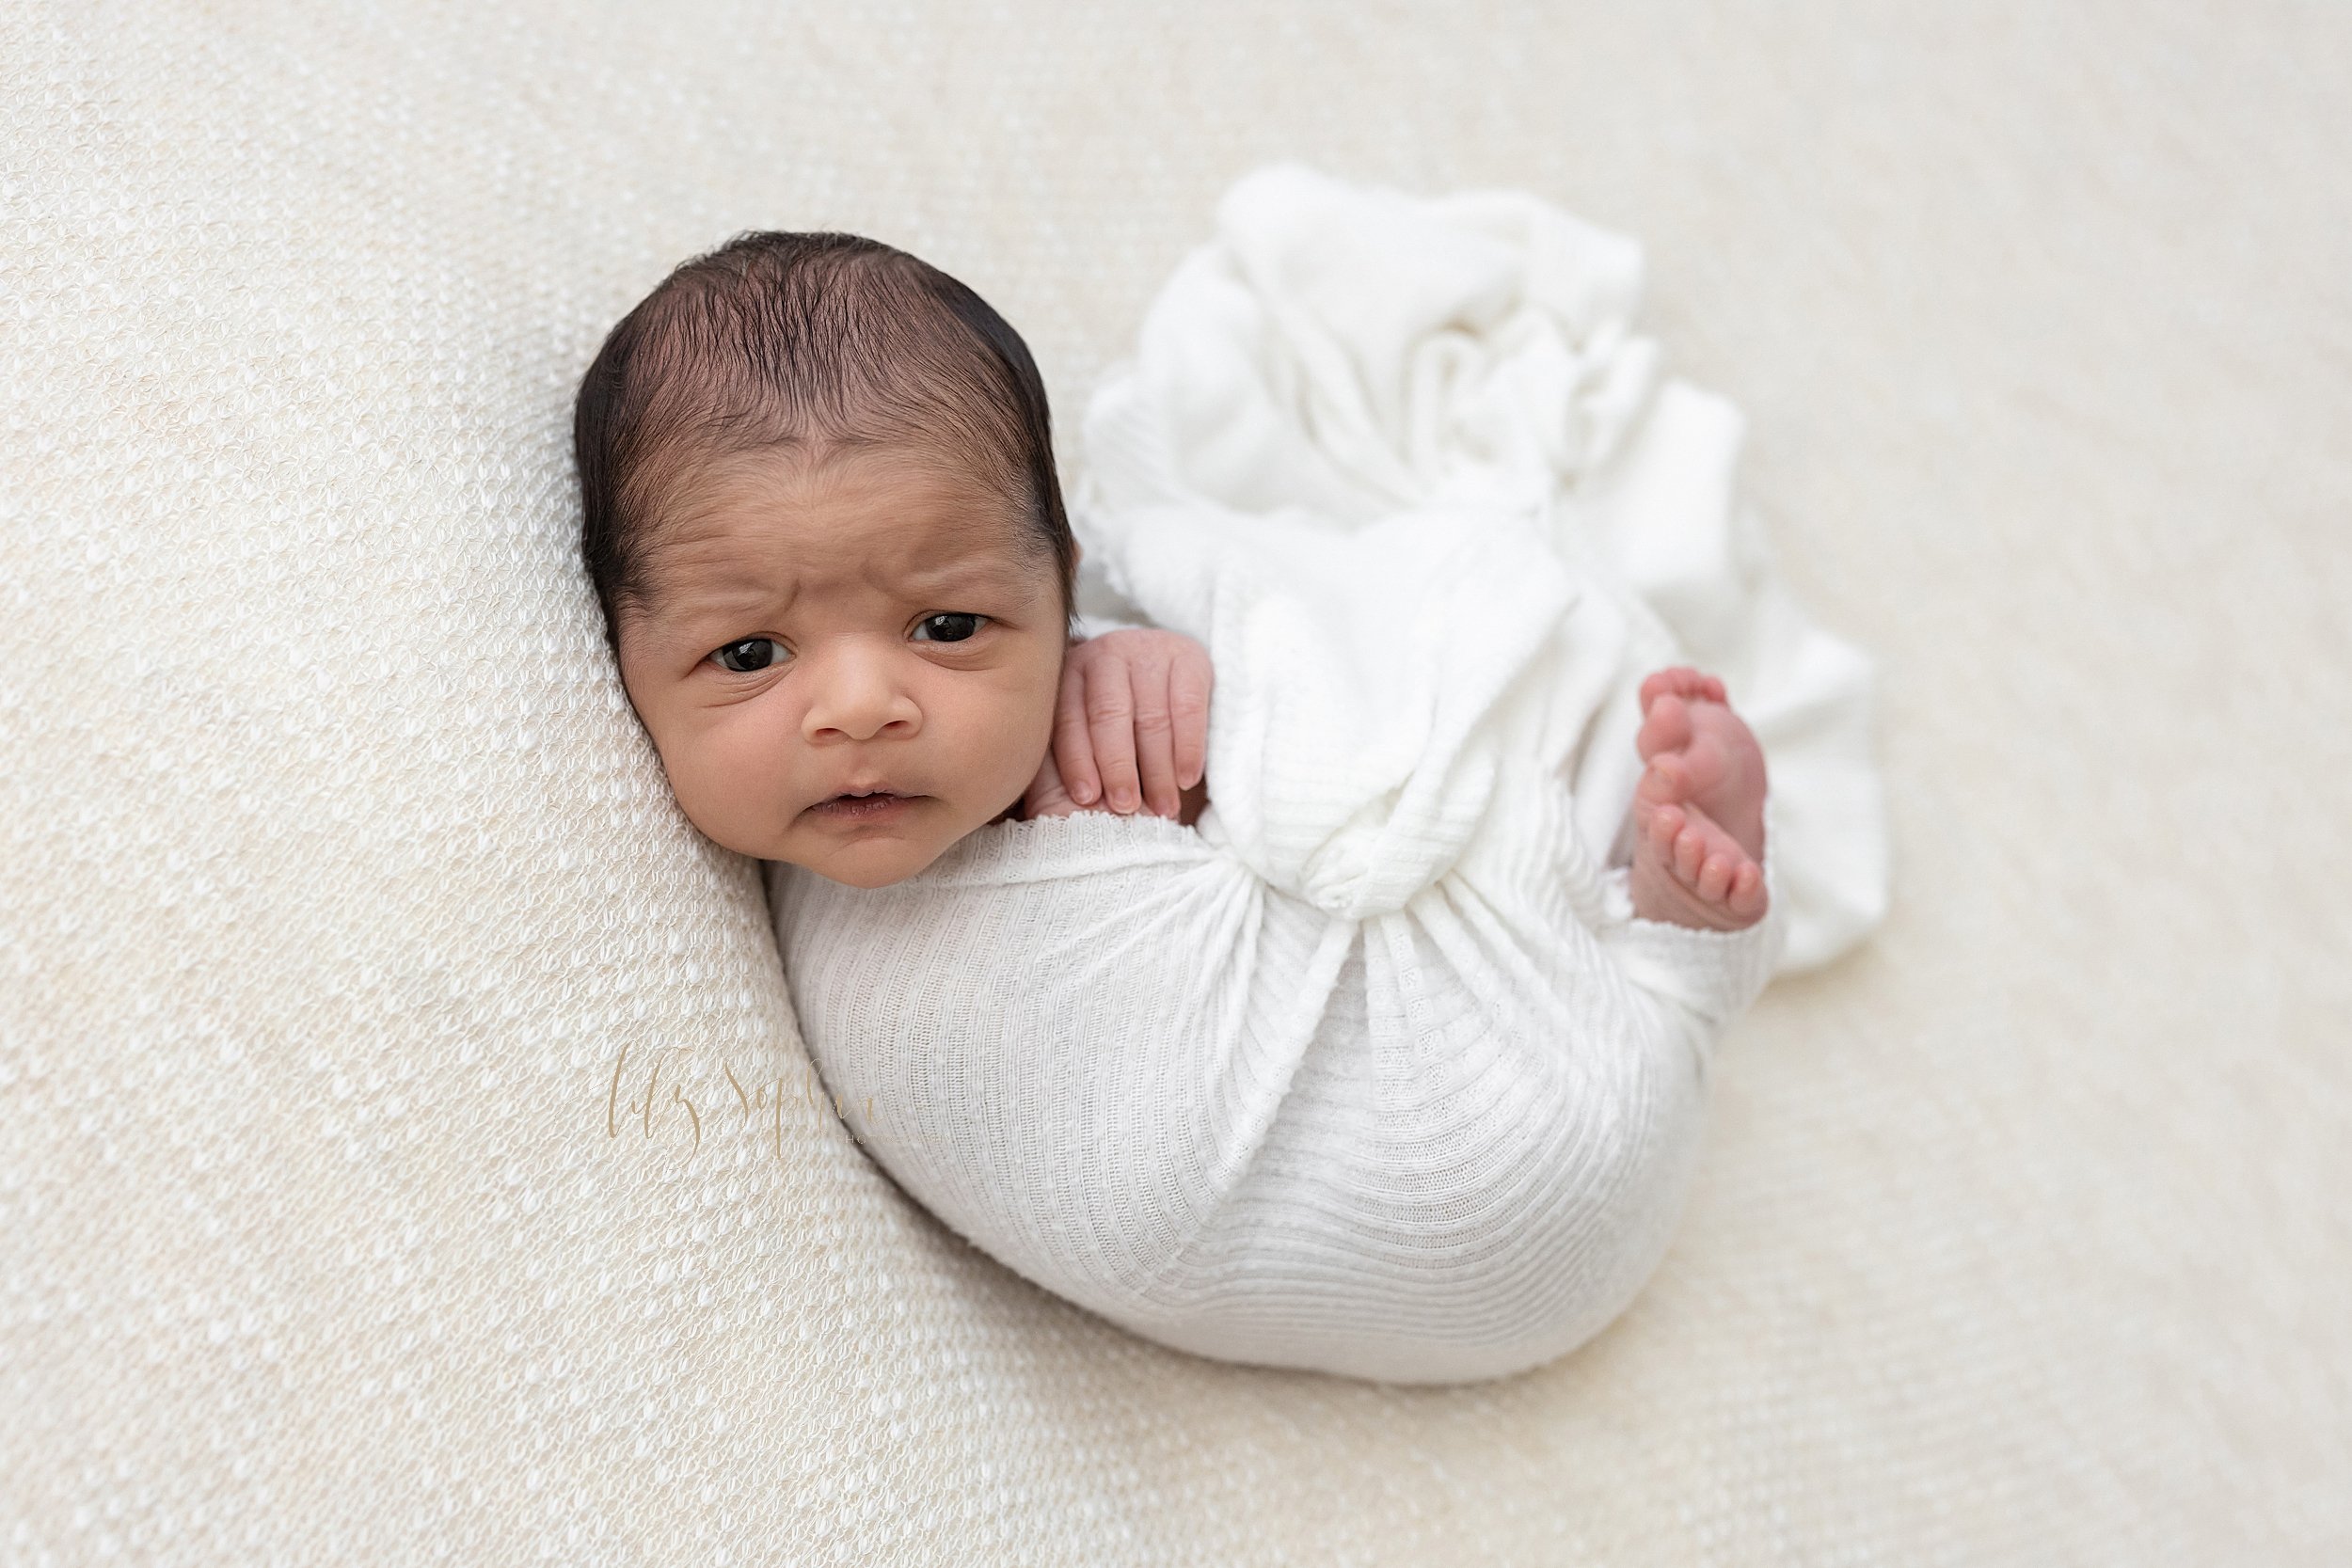 intown-atlanta-grant-park-decatur-oakhurst-indian-family-baby-boy-studio-newborn-photoshoot_2313.jpg